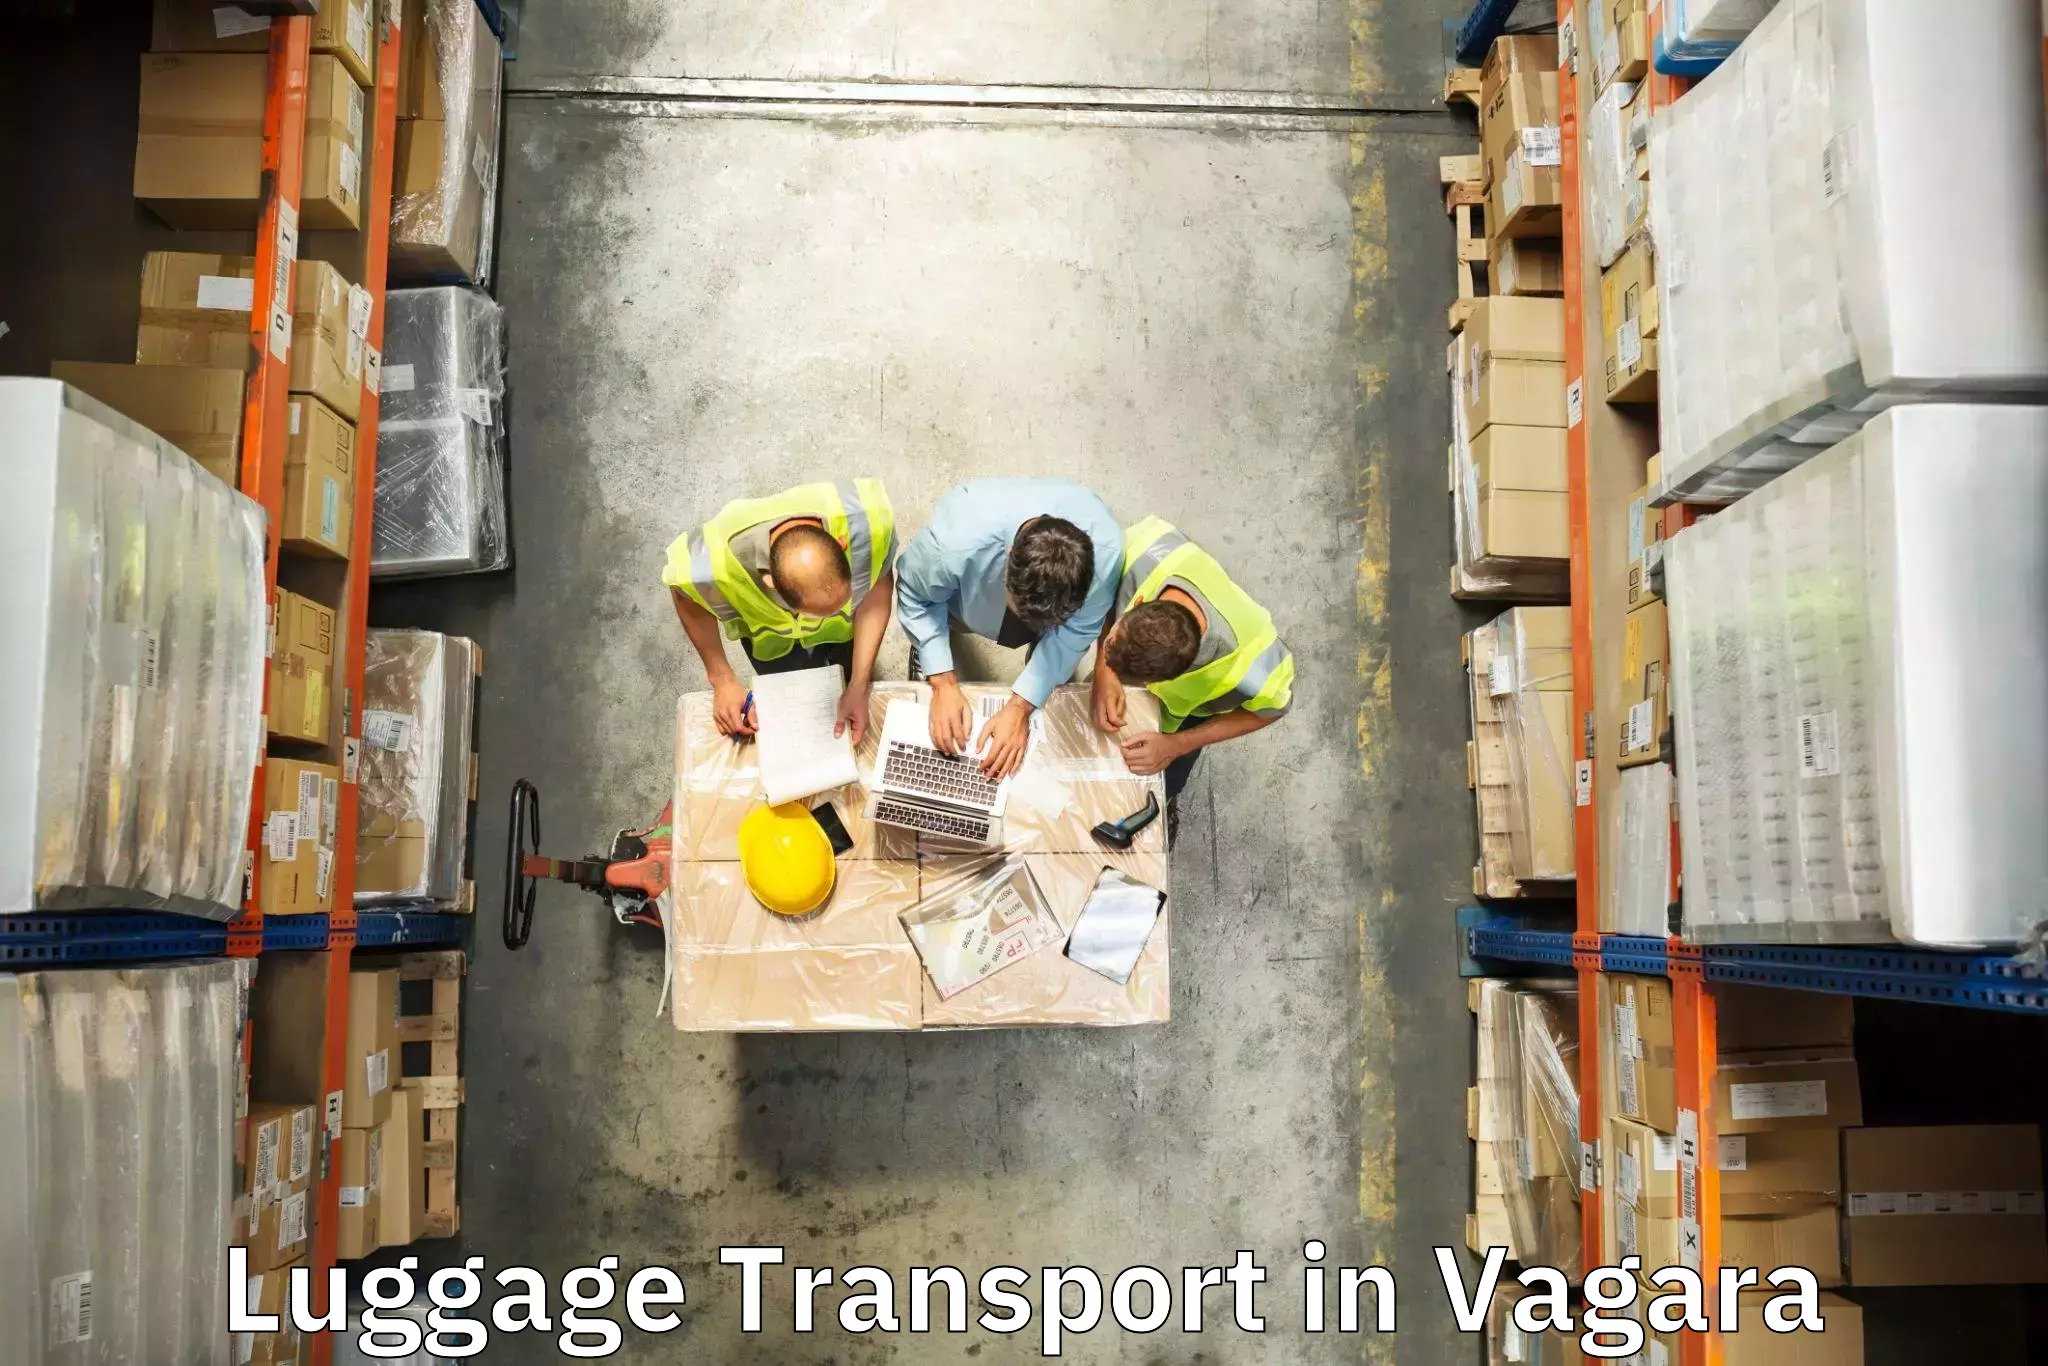 Luggage transport pricing in Vagara